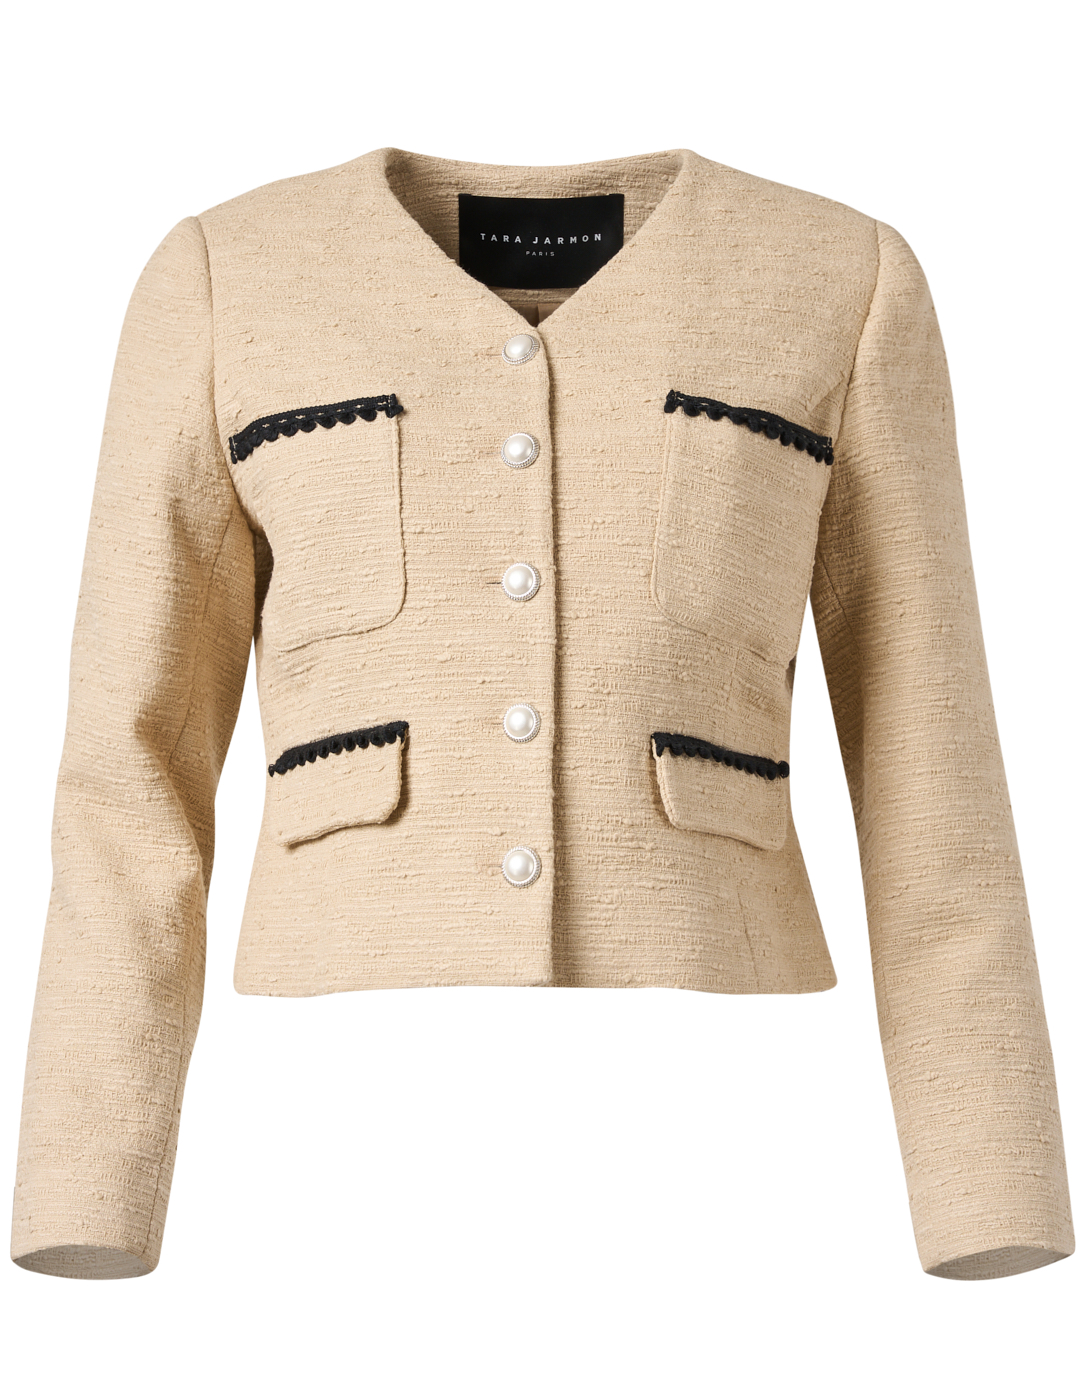 Versailles Beige Cotton Jacket | Tara Jarmon